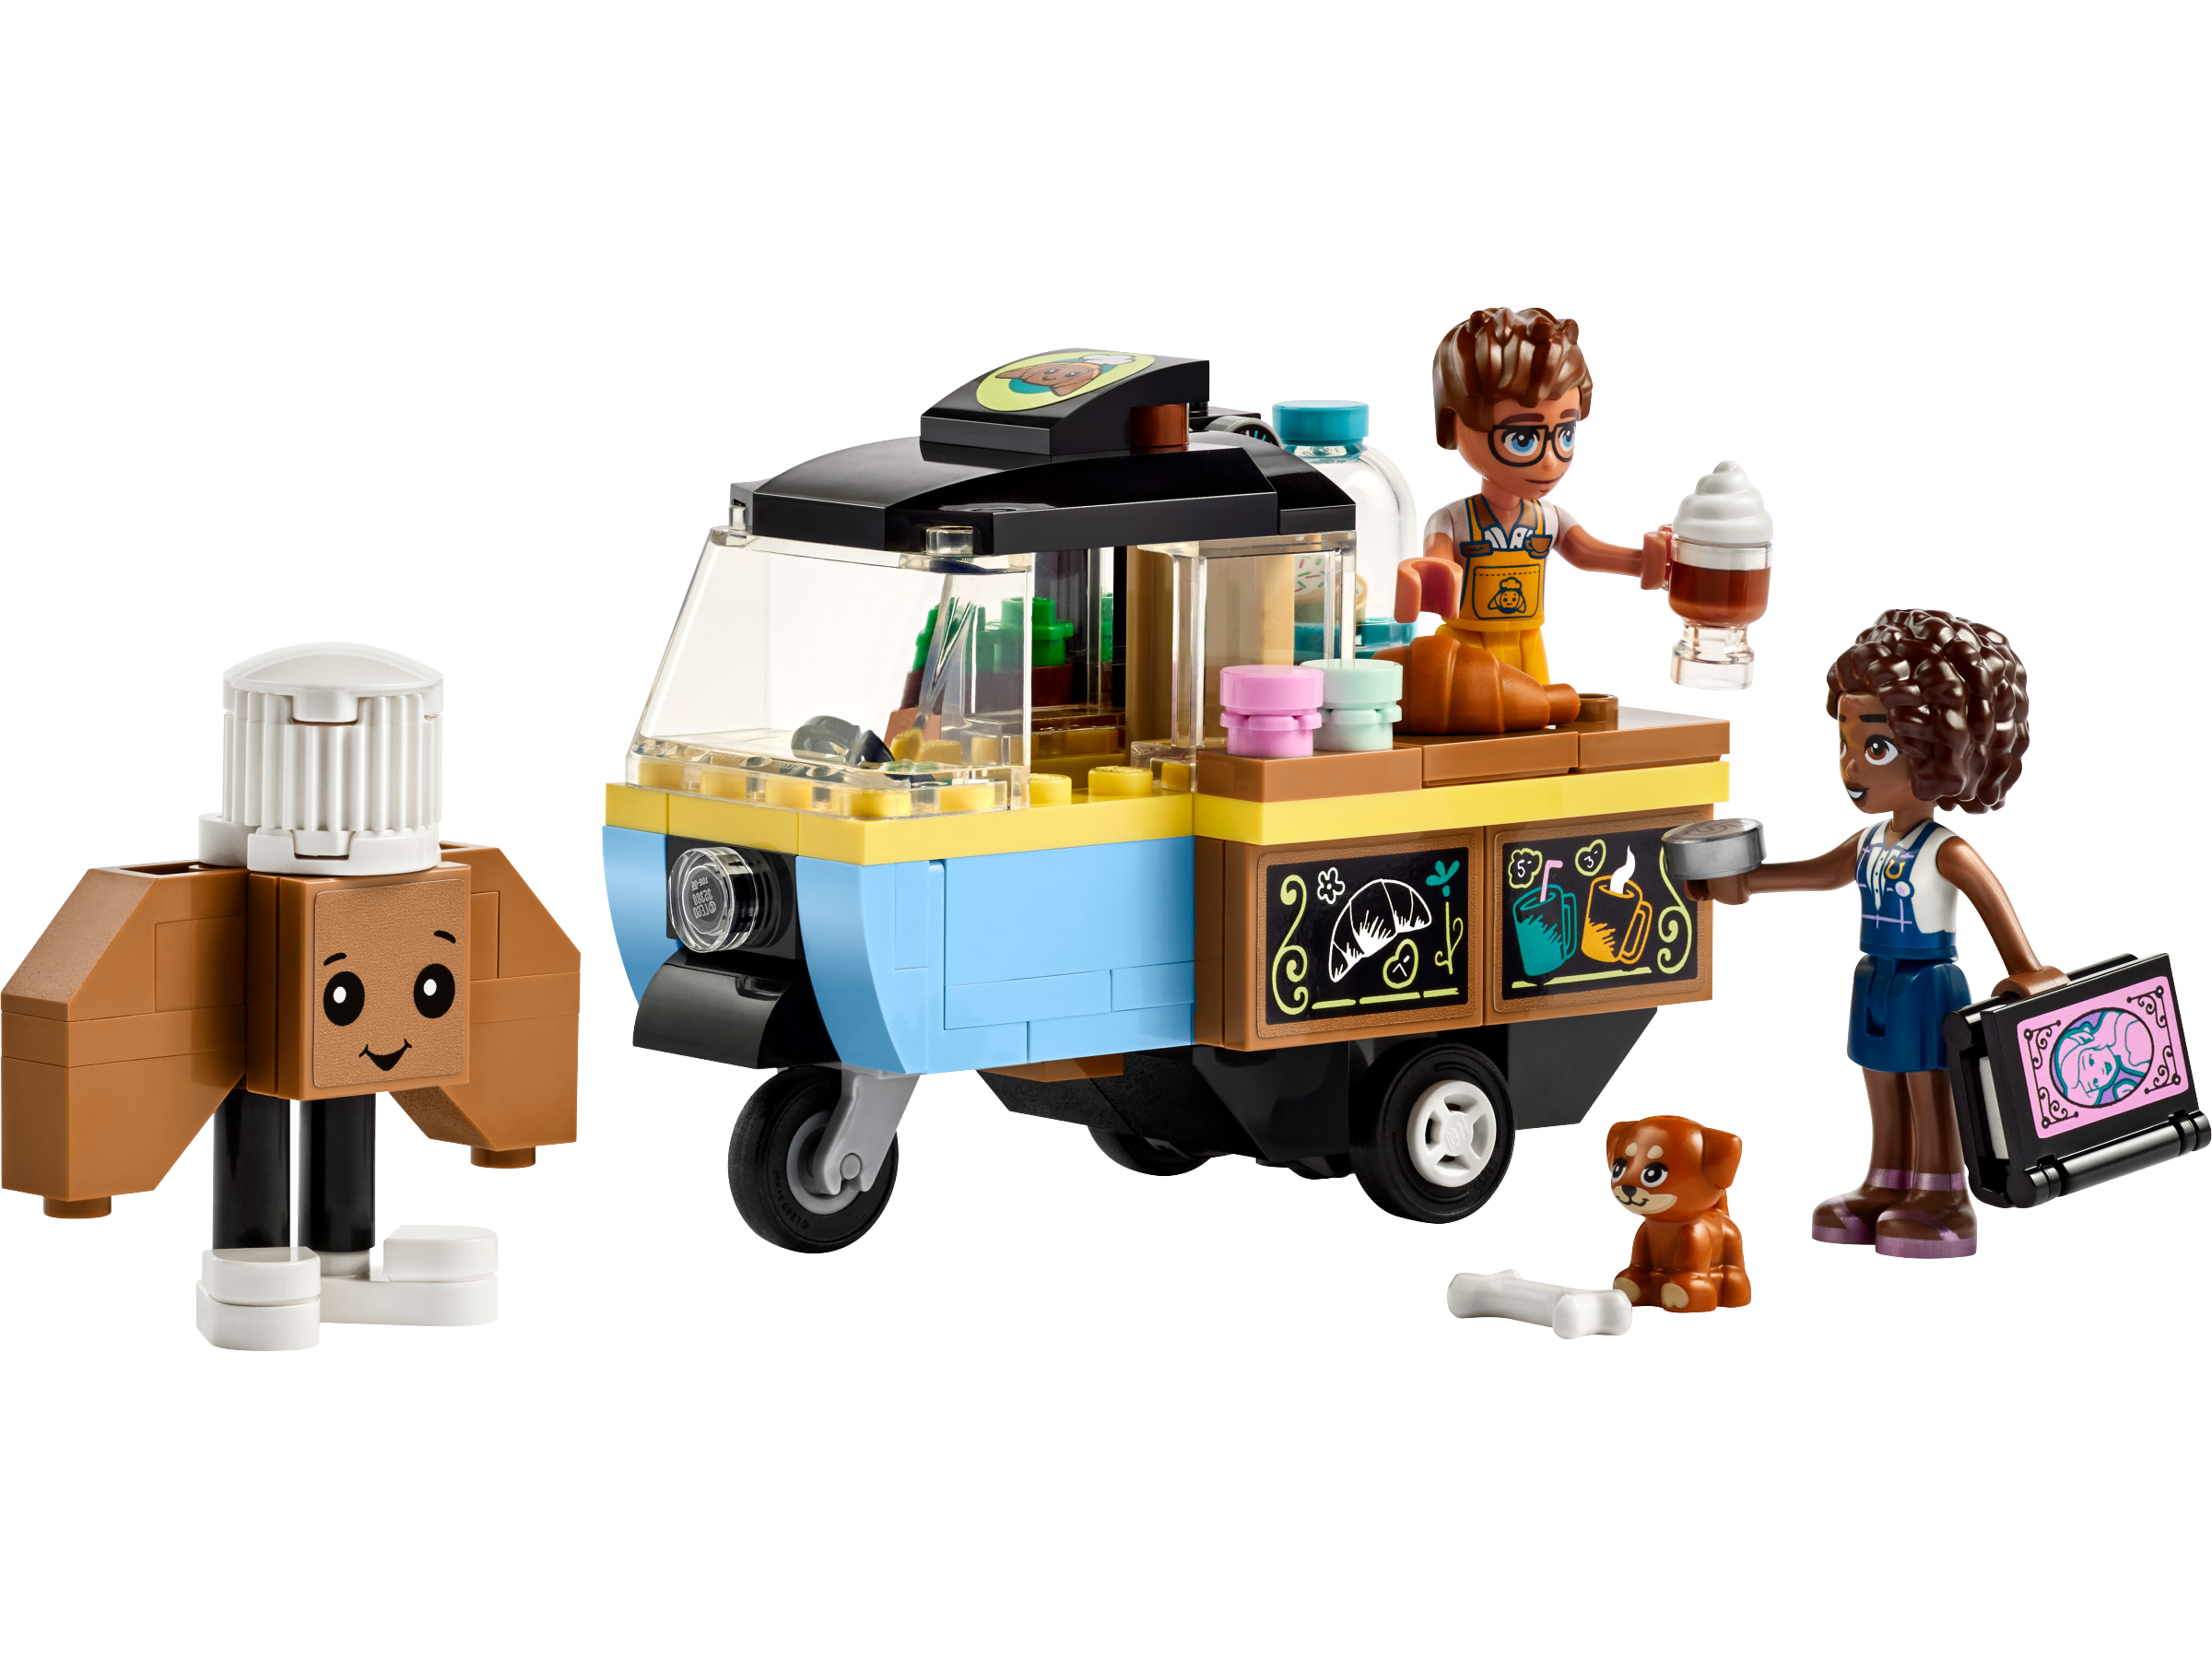 Lego 42606 Mobile Bakery Food Cart